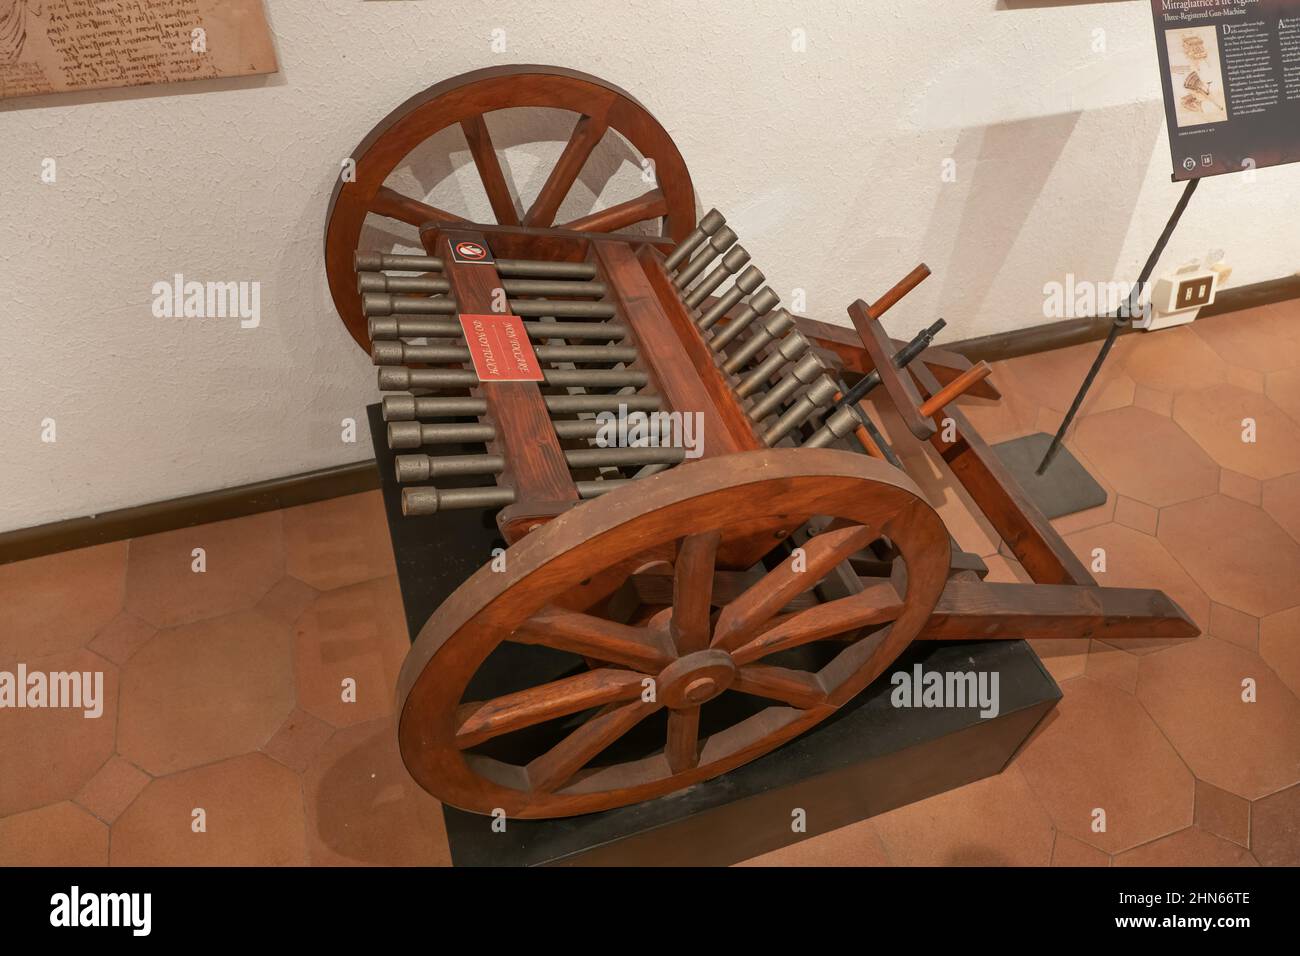 Multi barrelled gun machine, based on Leonardo drawing, Museum Leonardo Da Vinci in Rome, Italy. Stock Photo